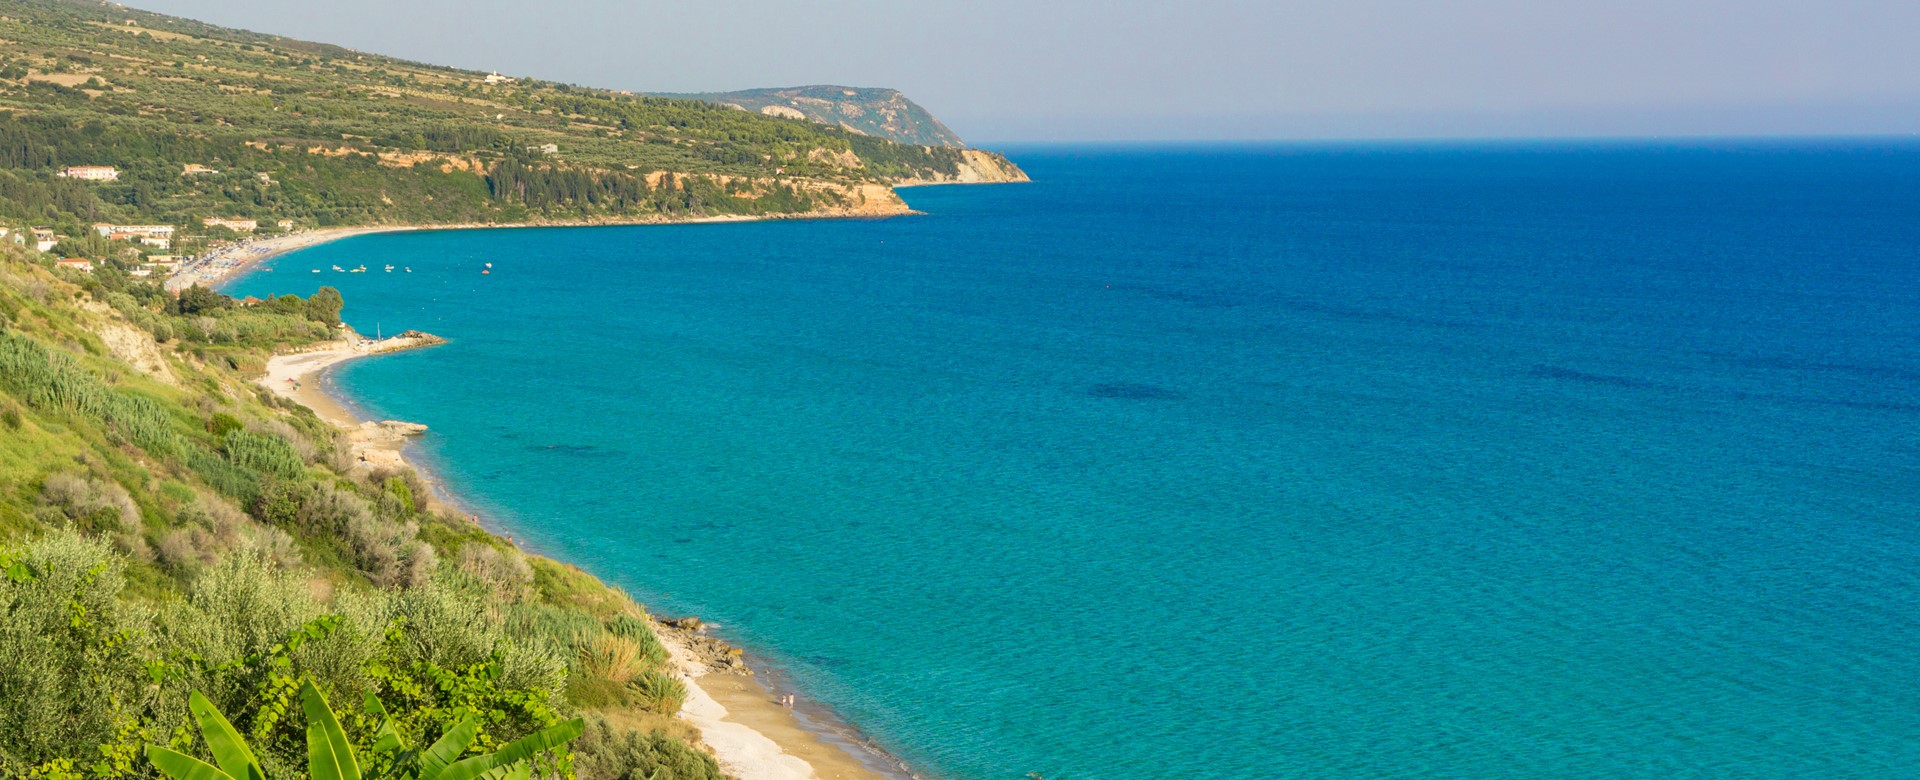 Sea views and beaches of Lourdata, Kefalonia, Greek Islands